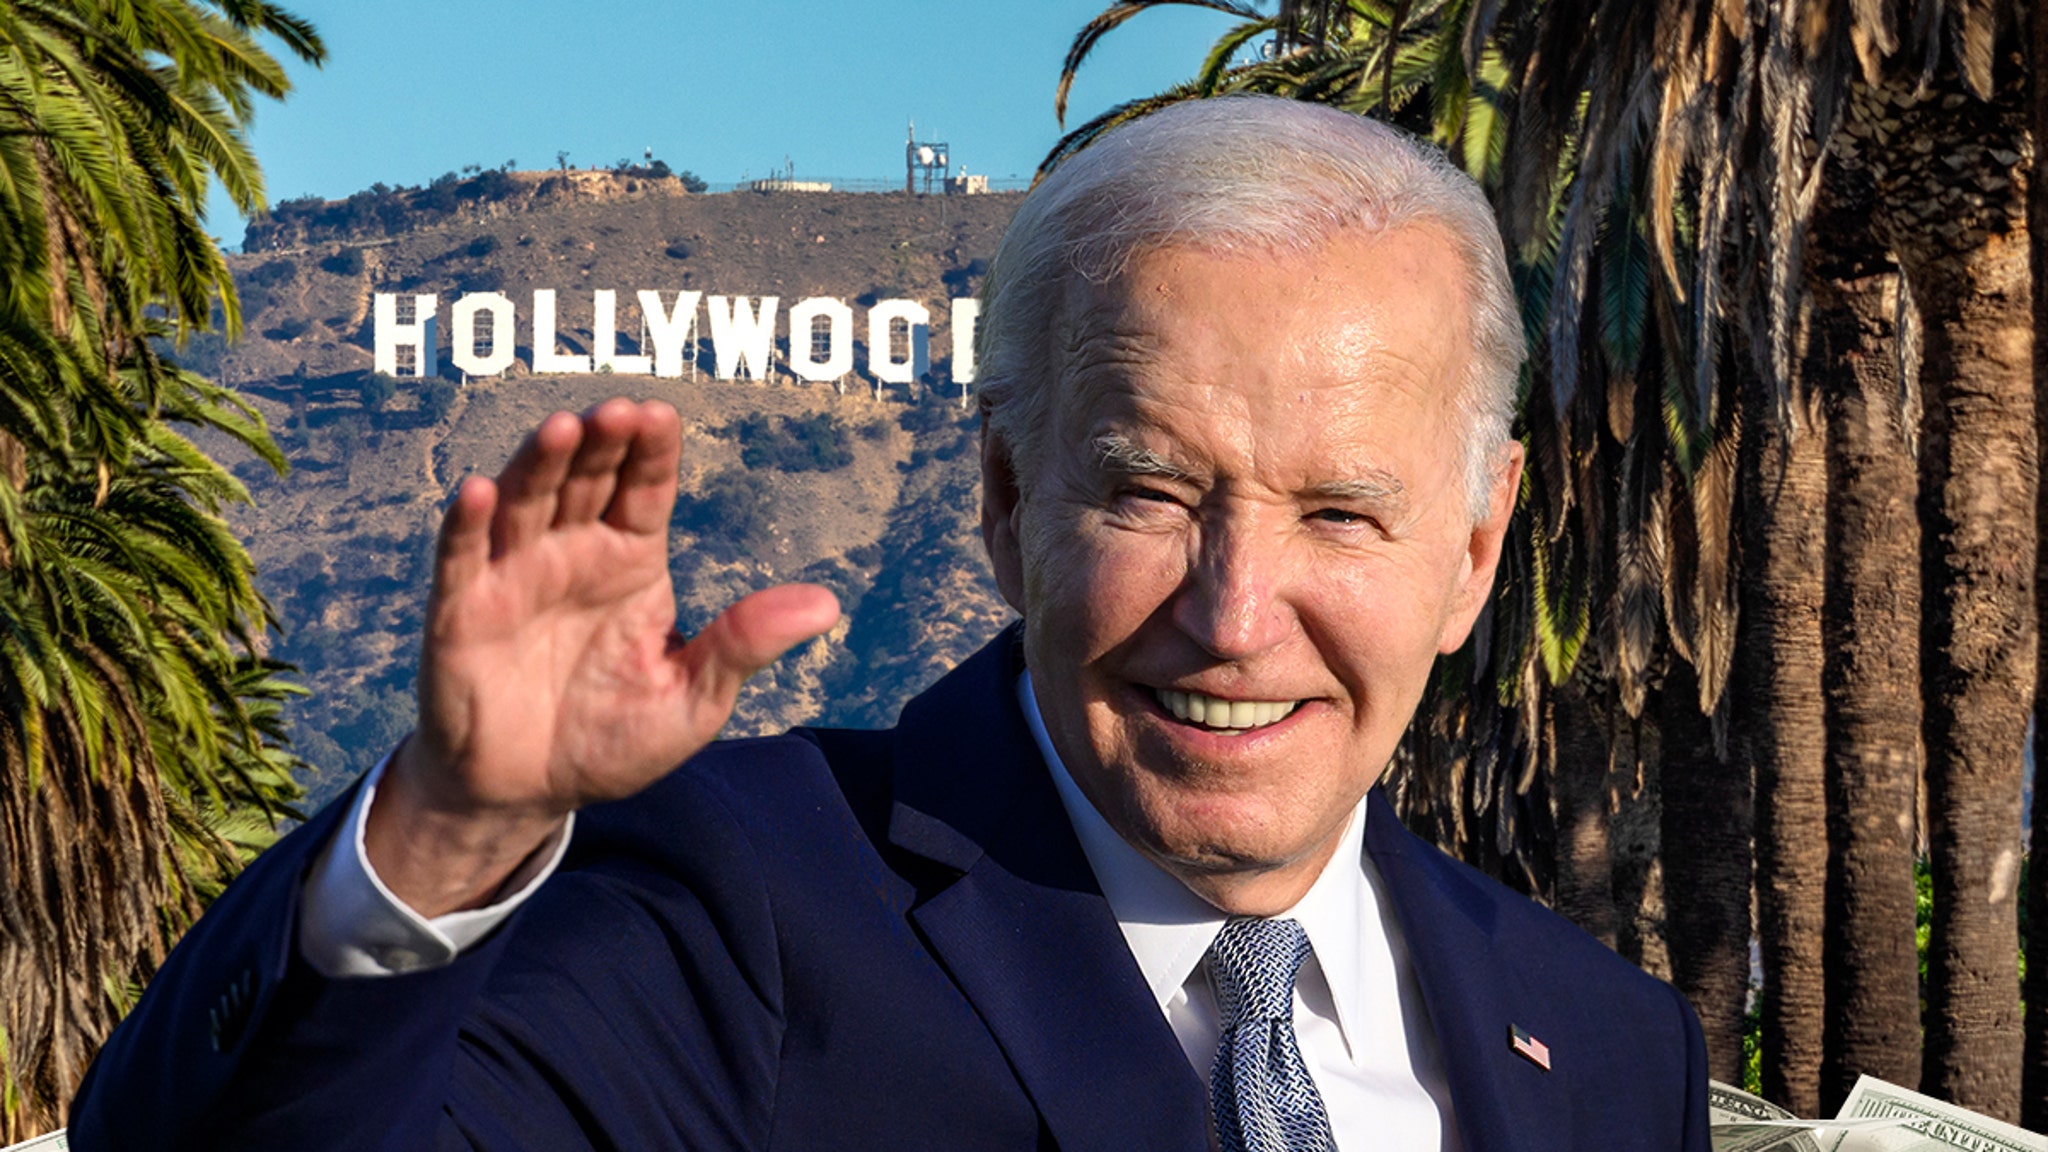 Biden’s Campaign Already Raised $28 Million Heading Into Hollywood Fundraiser